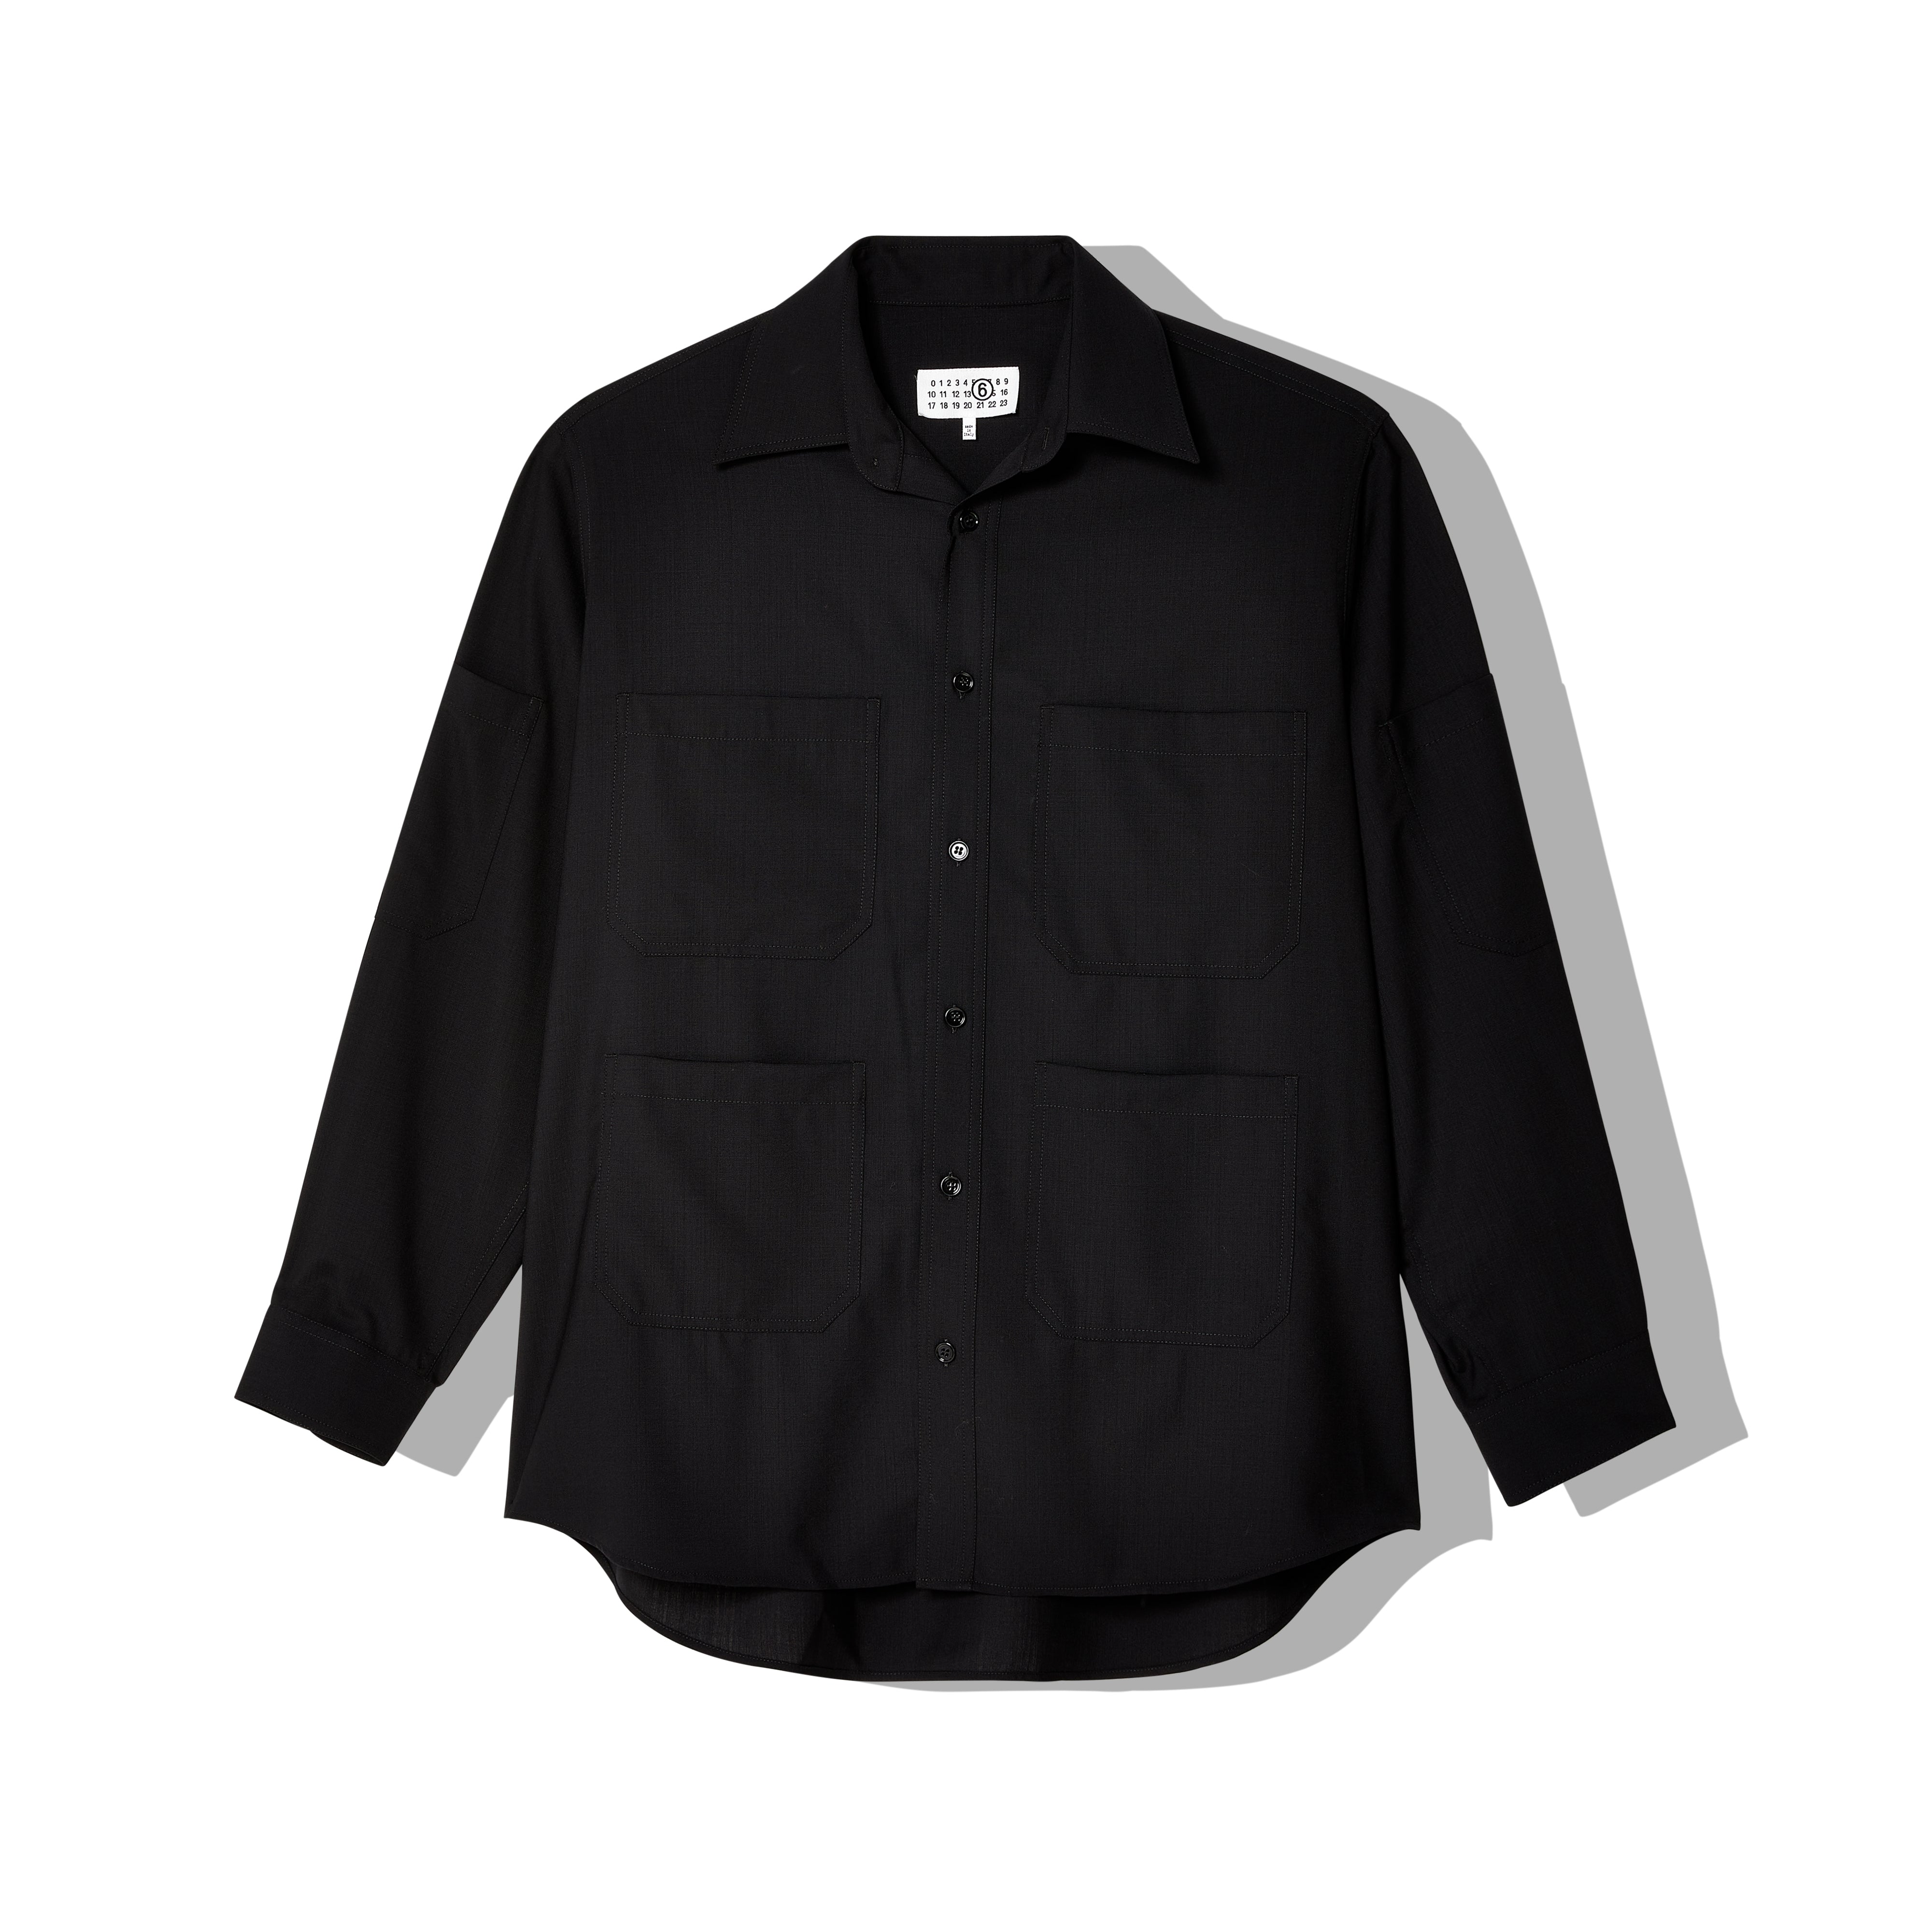 MM6 Maison Margiela: Men's Long-Sleeved Shirt (Black) | DSMNY E-SHOP